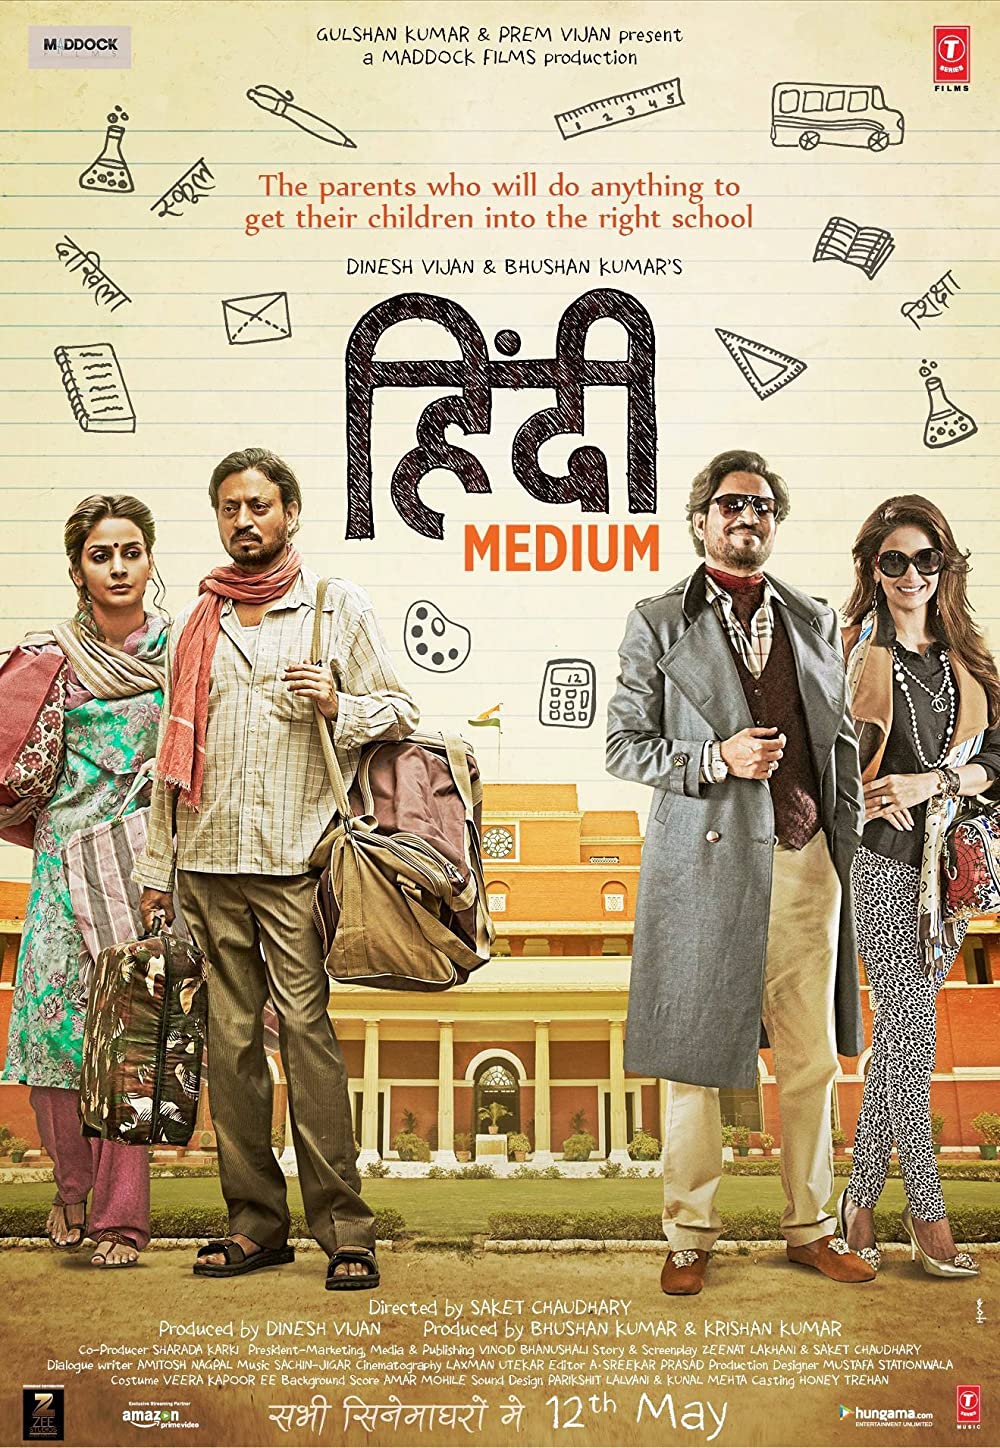 hindi-medium-hindi-comedy-movies-on-amazon-prime - Pop Culture,  Entertainment, Humor, Travel & More